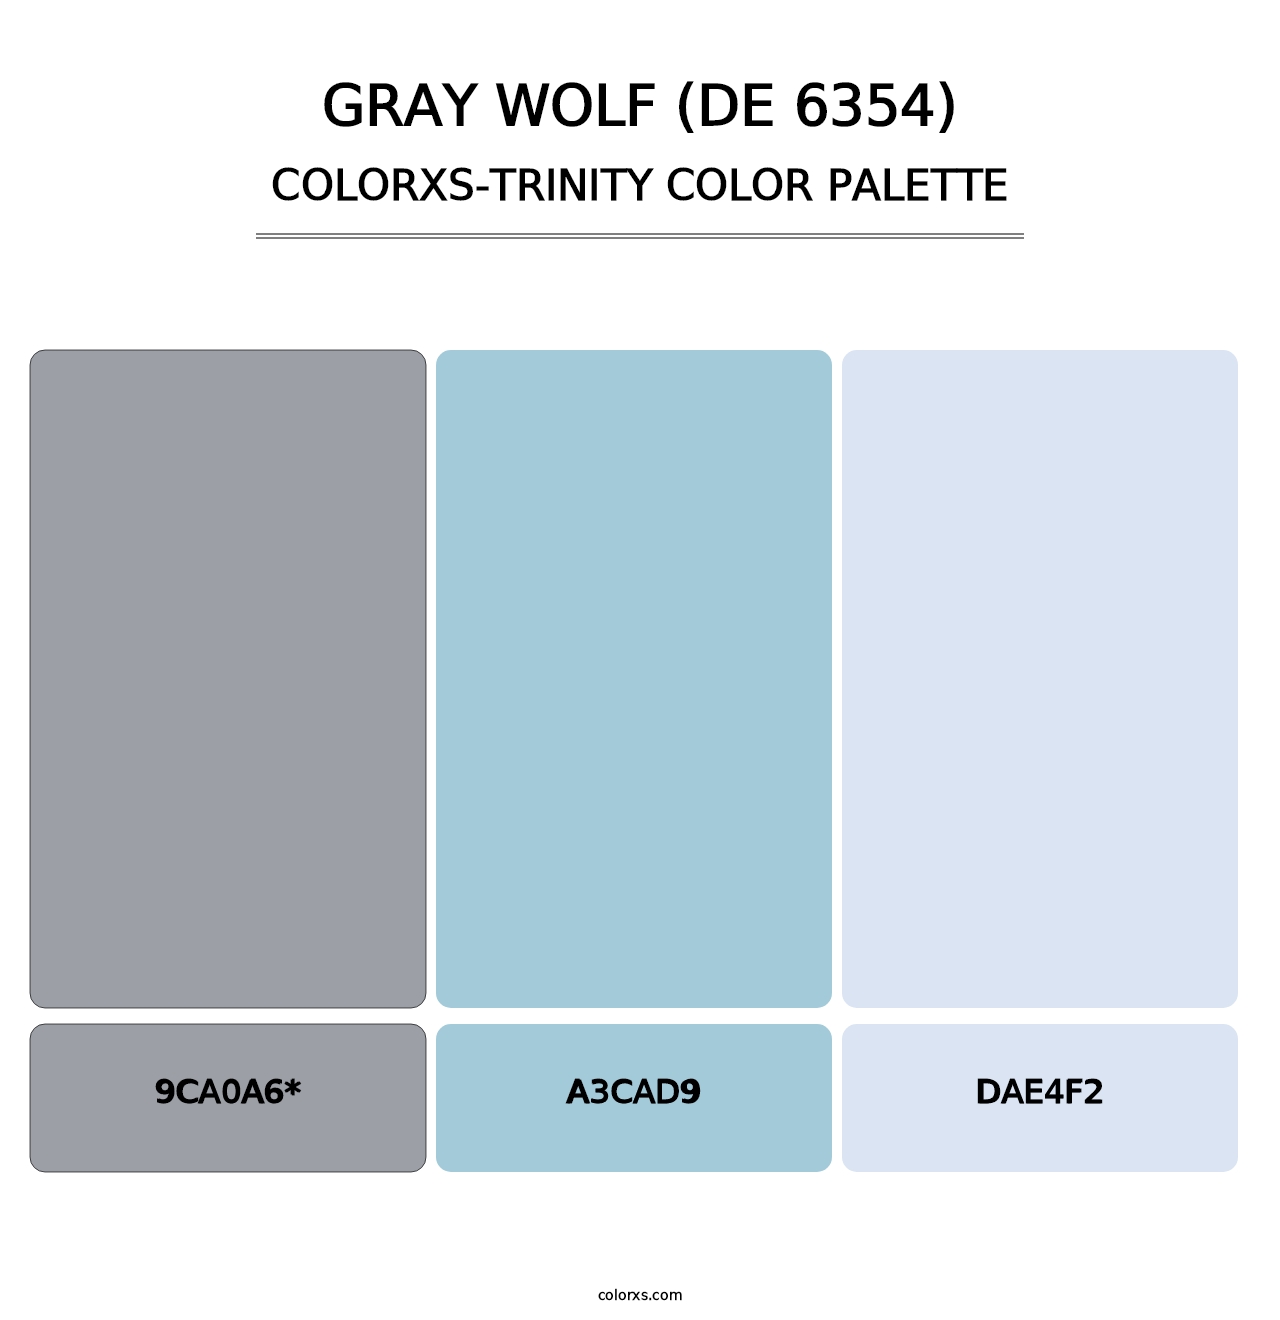 Gray Wolf (DE 6354) - Colorxs Trinity Palette